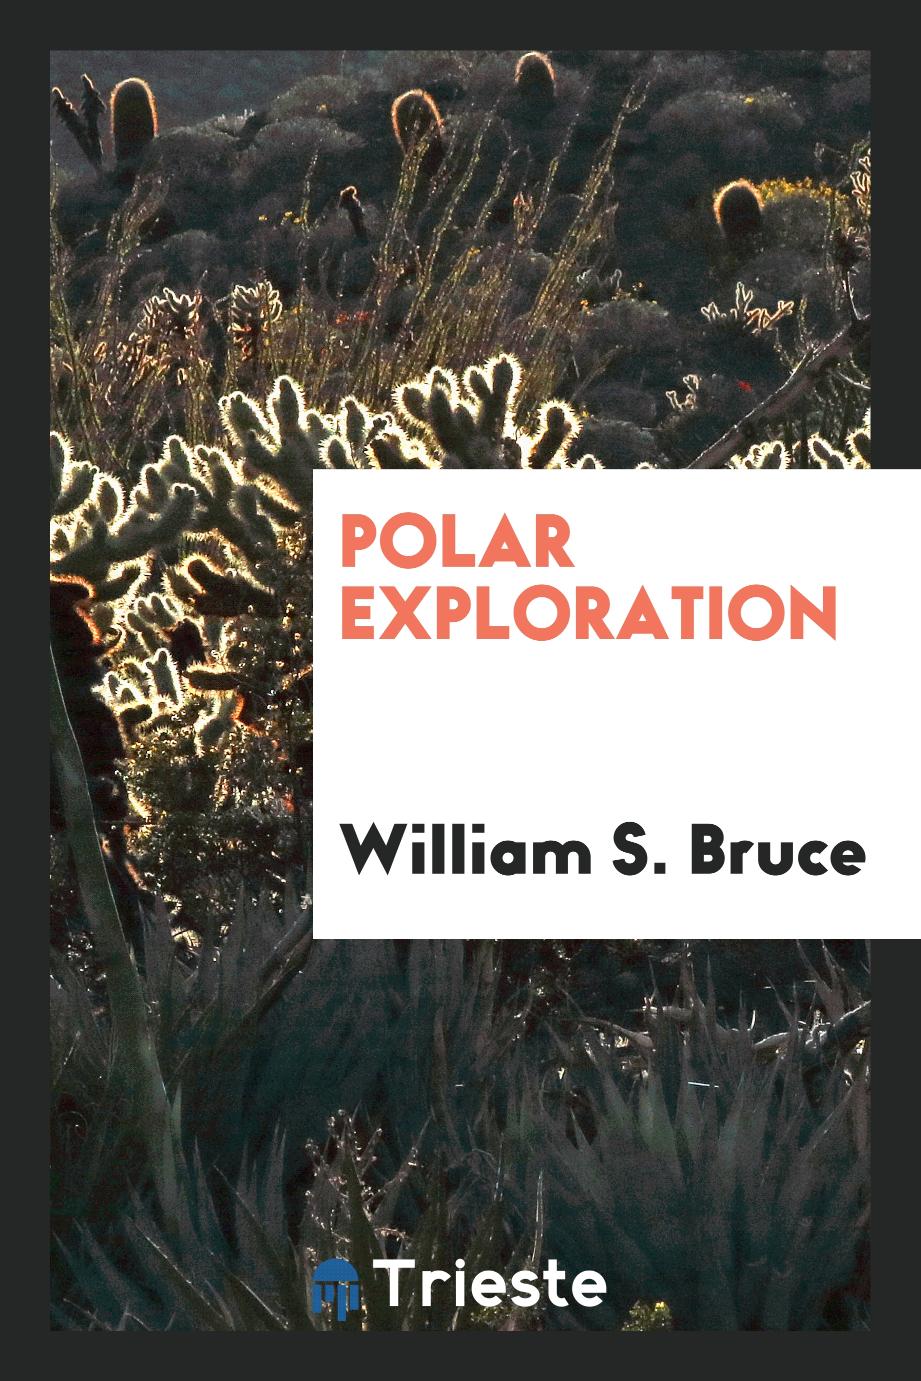 Polar exploration